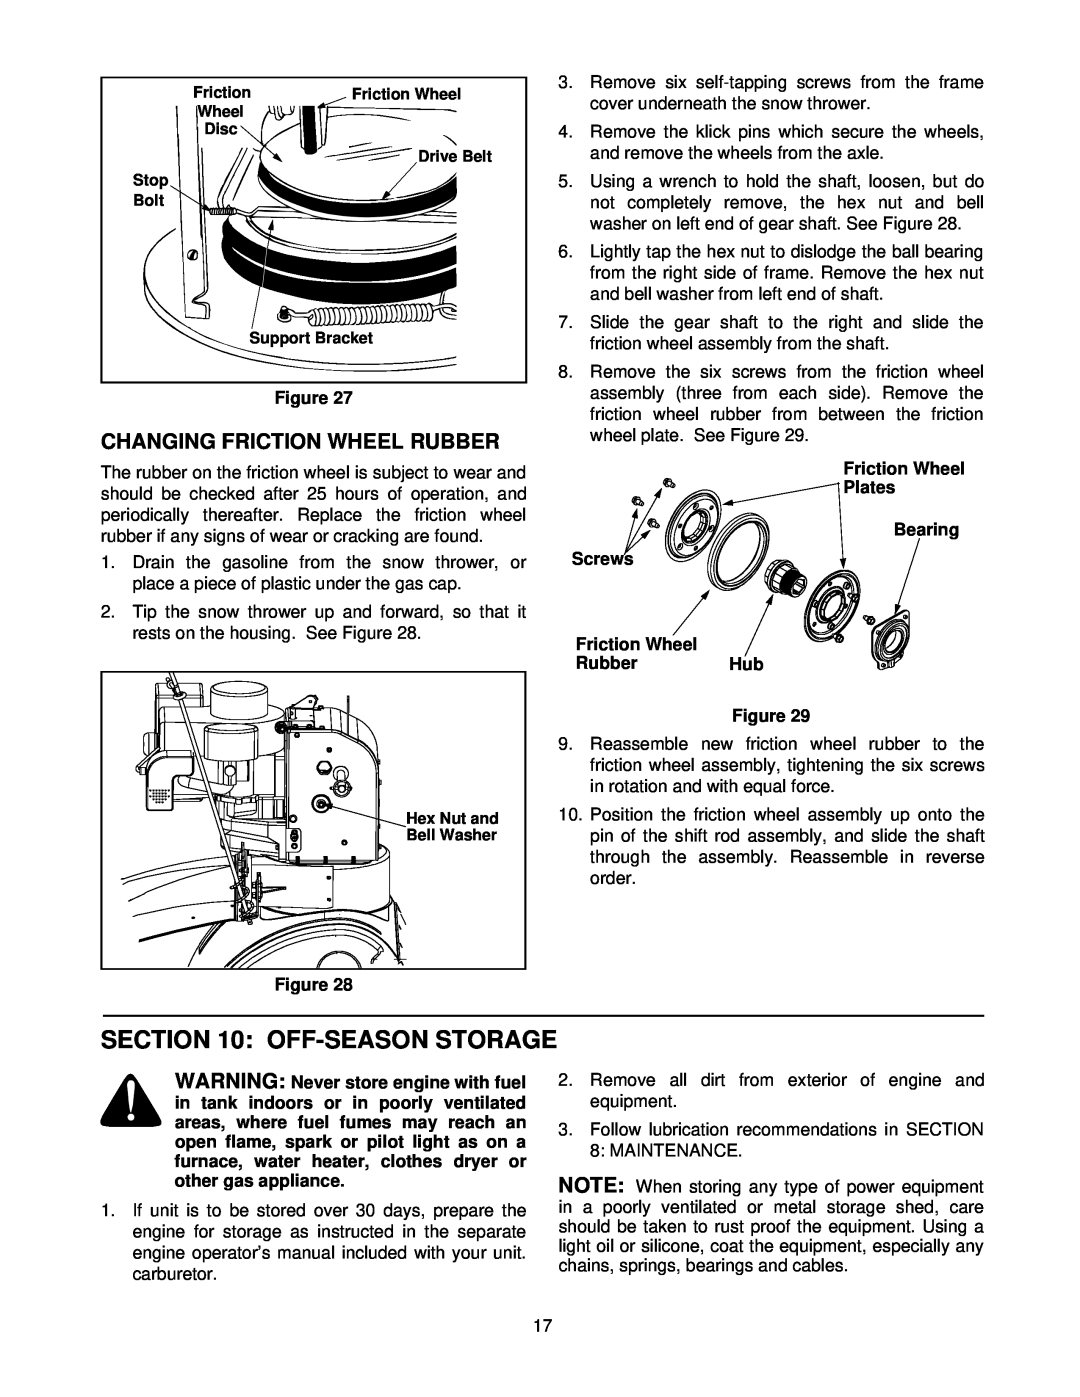 MTD E600E manual Off-Seasonstorage, Changing Friction Wheel Rubber, Friction Wheel Plates Bearing Screws, Figure 